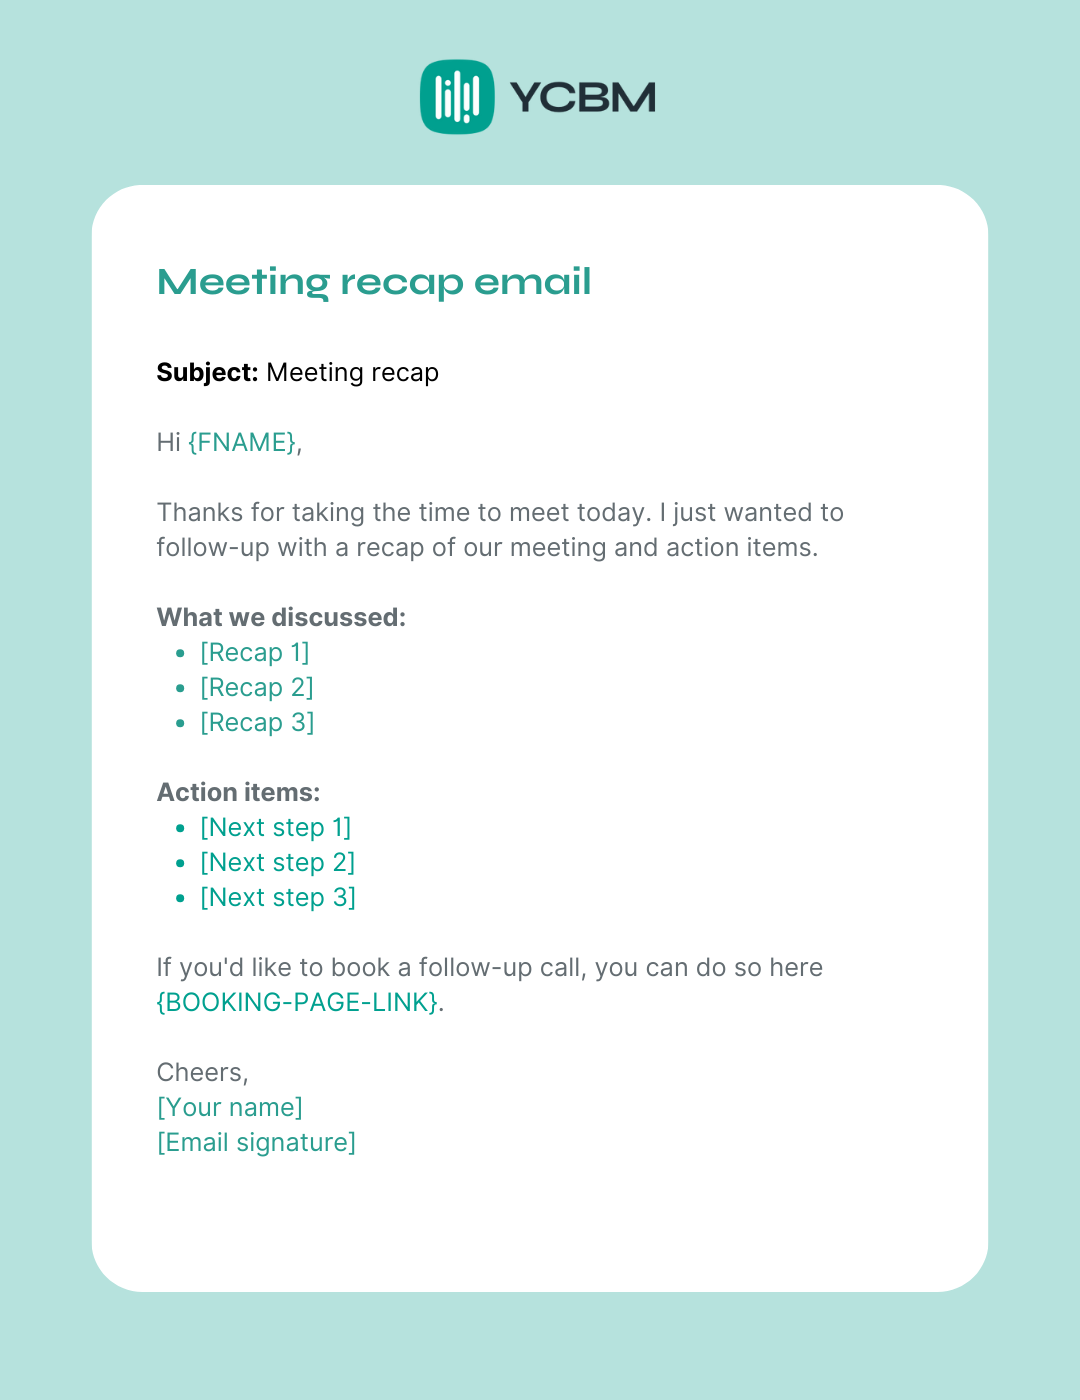 Meeting recap email template